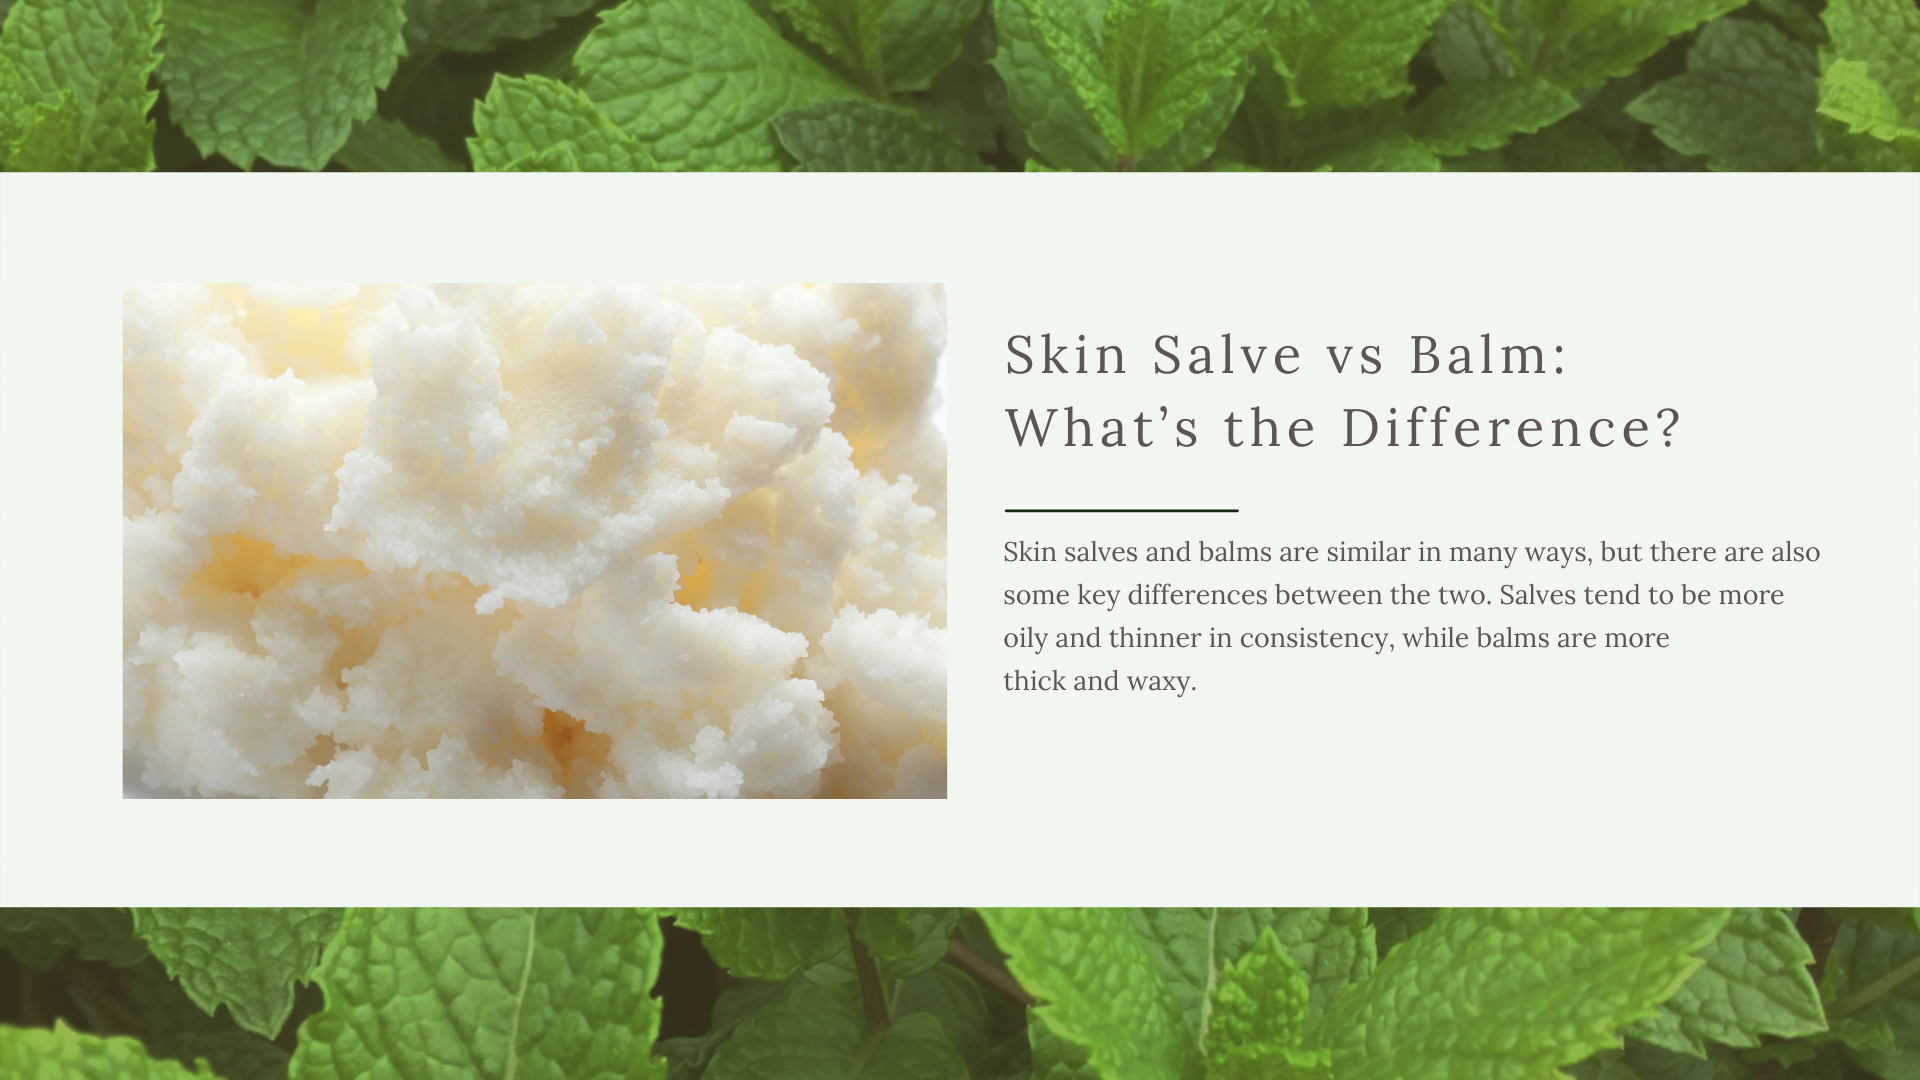 moisturizing dry skin naturally with skin balms